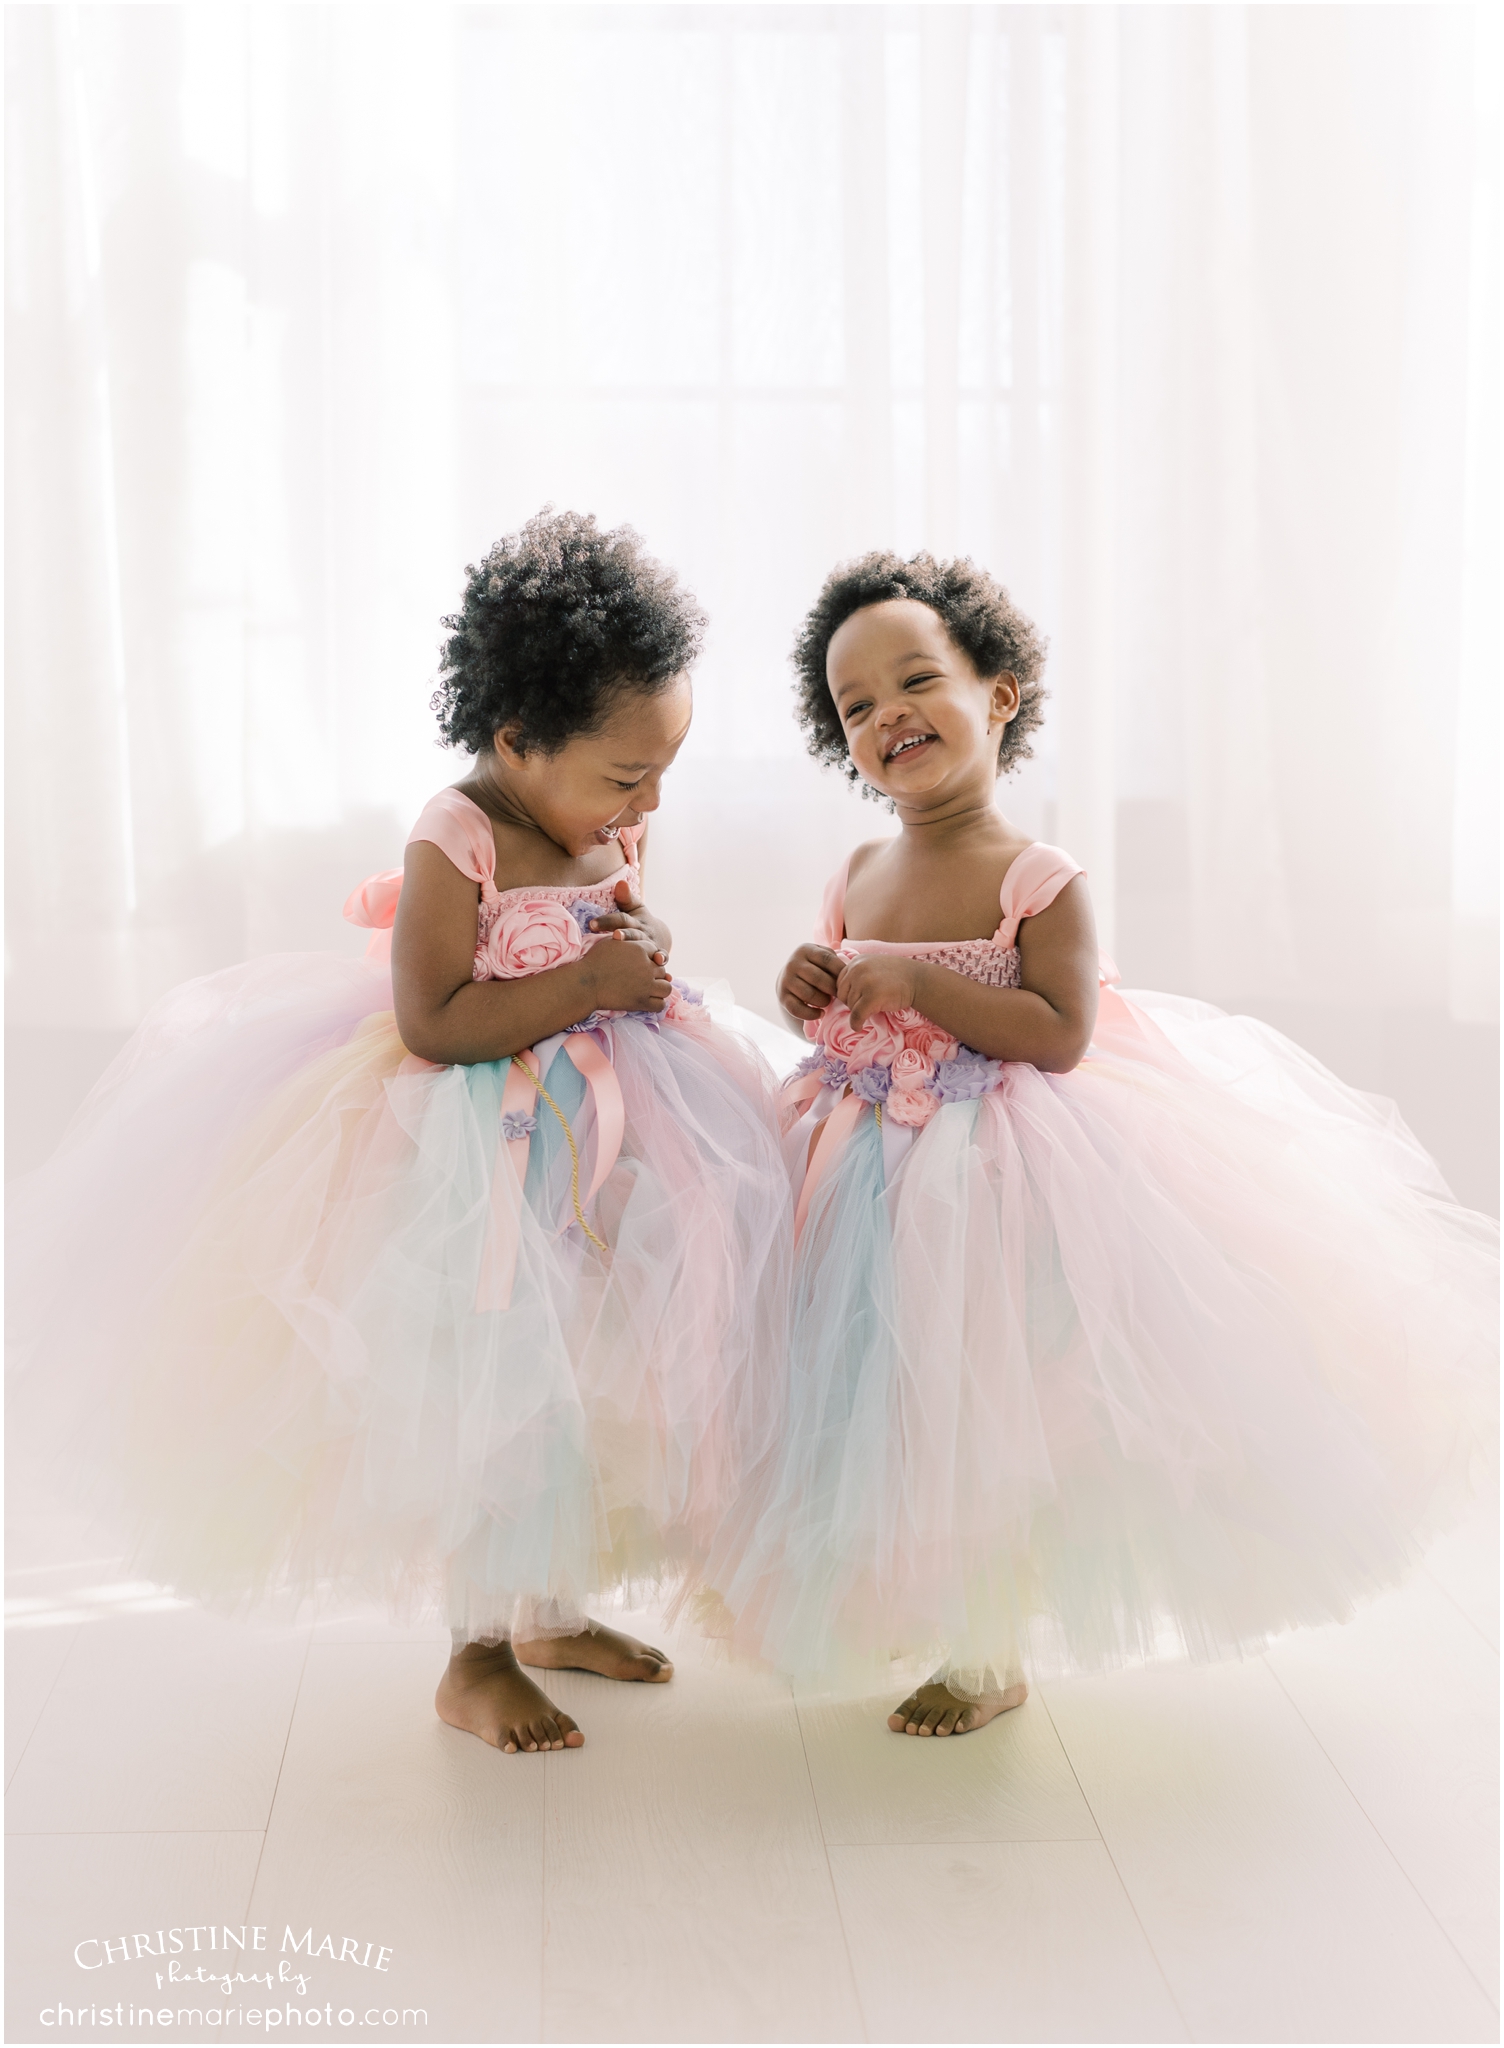 little girls in tutu dresses laughing 